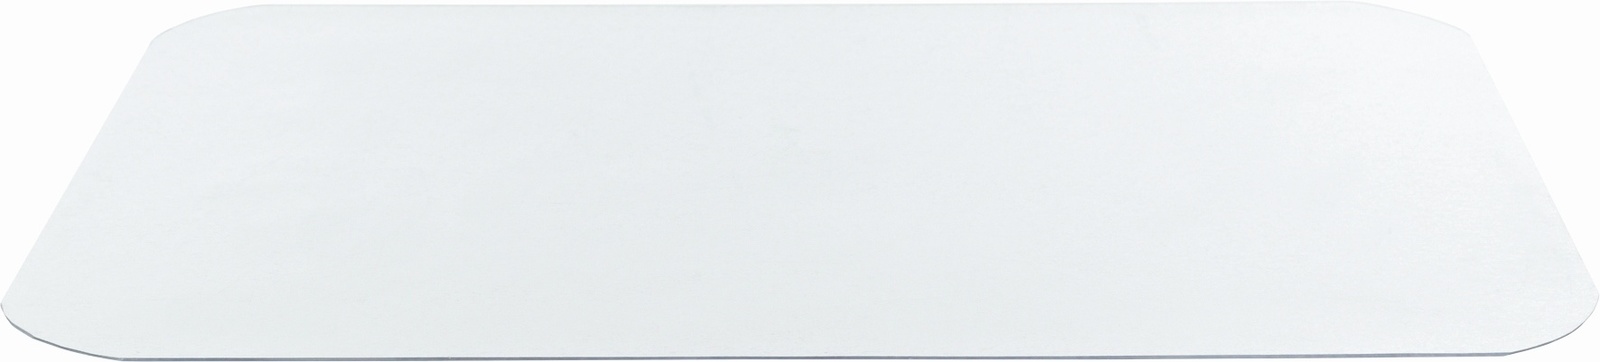 Trixie Trixie коврик под миску, прозрачный (48×30см) коврик под миску trixie для собак силиконовый 48×27 см прозрачный